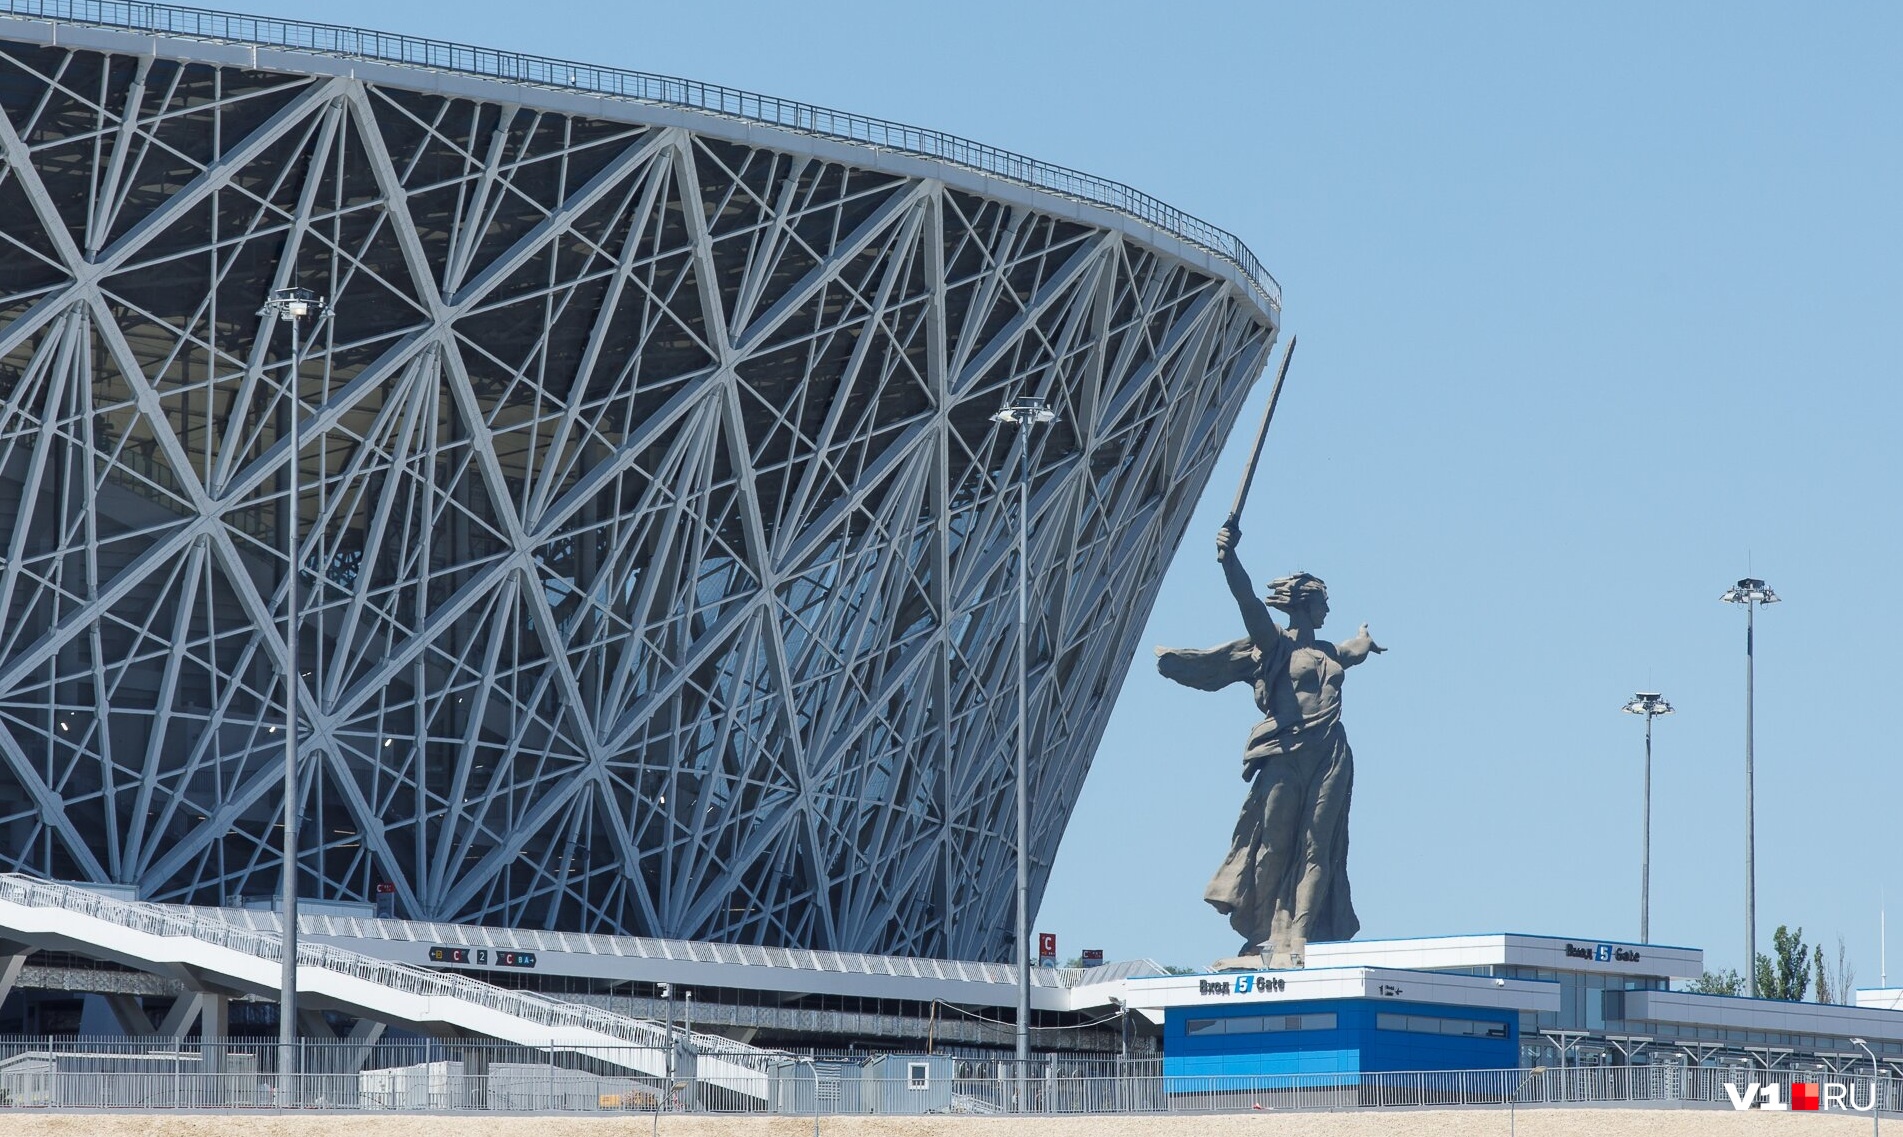 Снова в «хвосте»: чемпионат мира не спас бюджет Волгограда от падения вниз